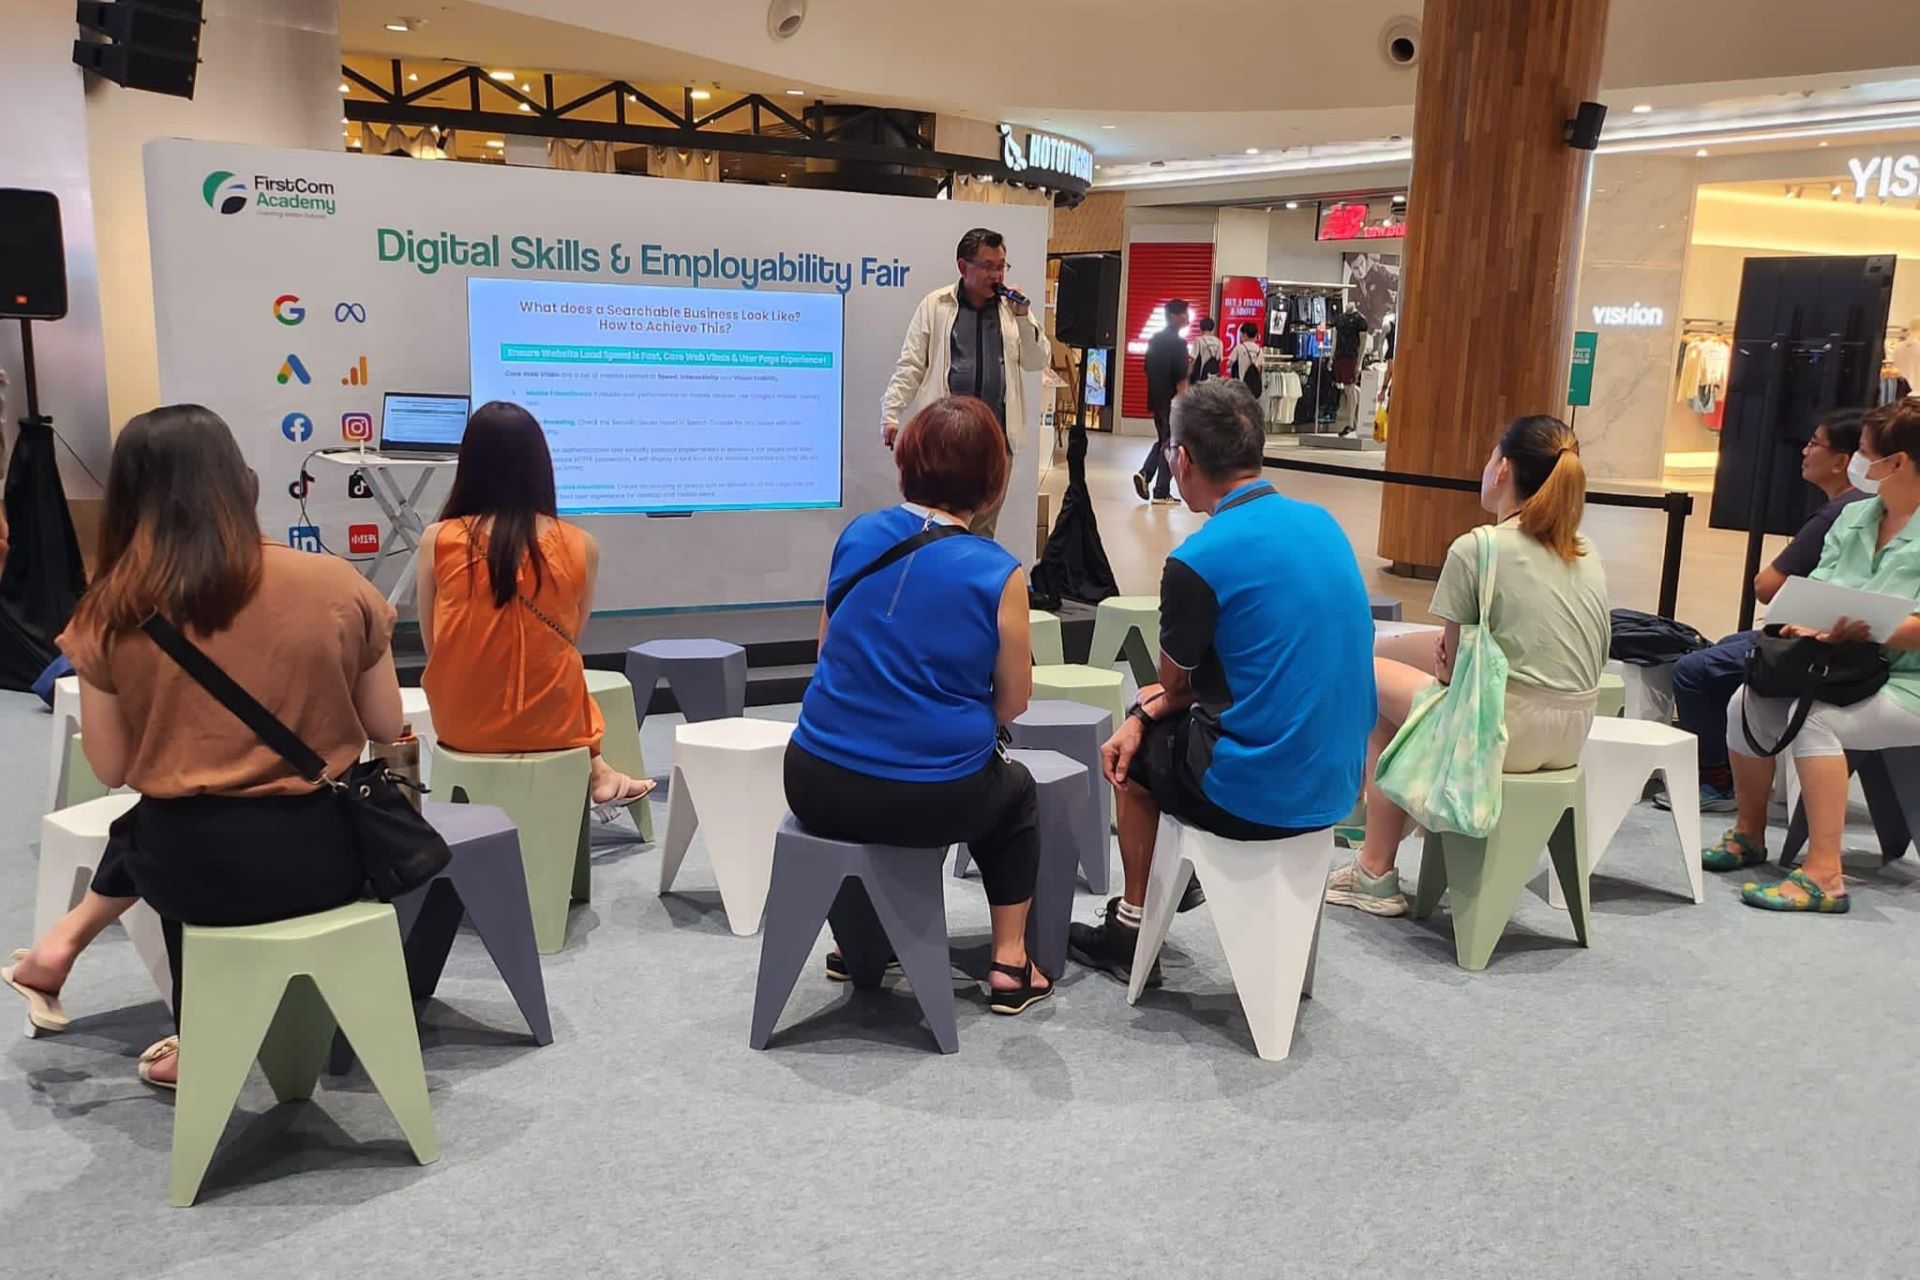 Digital Skills & Employability Fair at Waterway Point Digital Skills Workshops